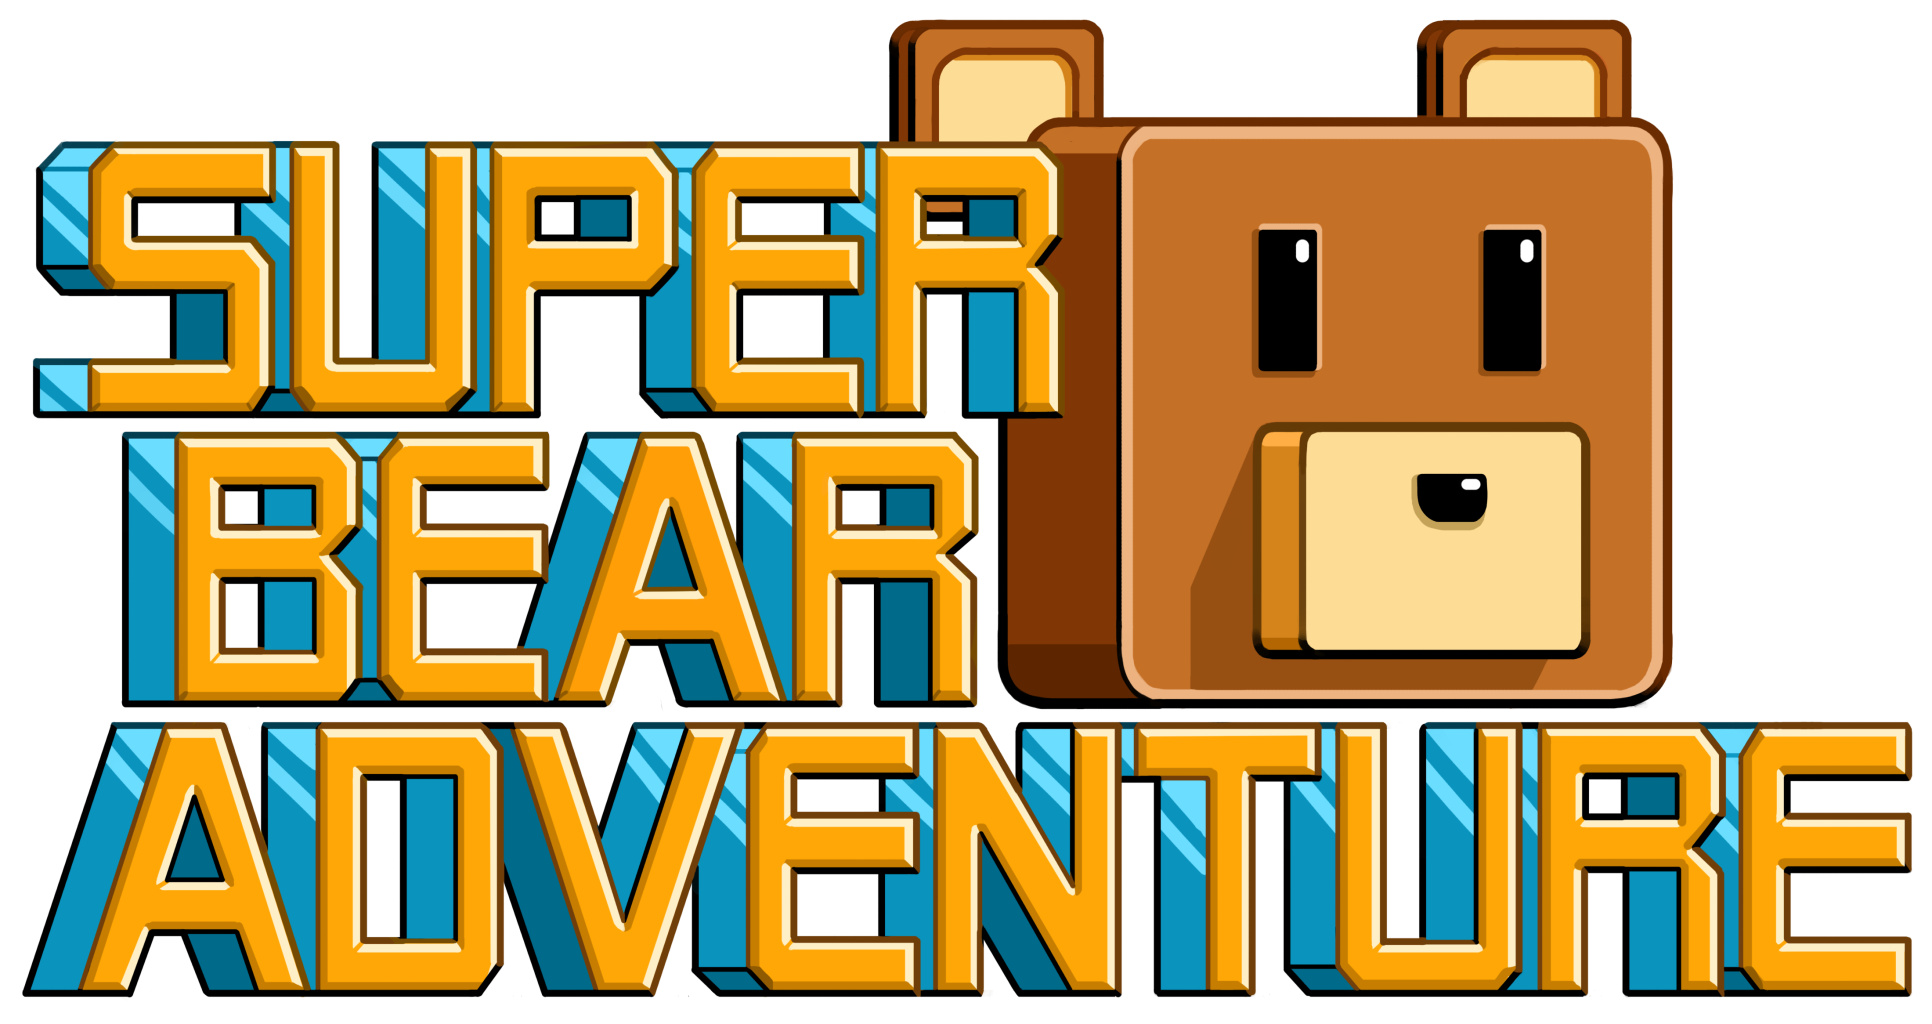 Sba super bear adventure. Супер Беар адвенчер. Игра супер Беар. Супер медведь игра. Супер Беар адвентуре игра.